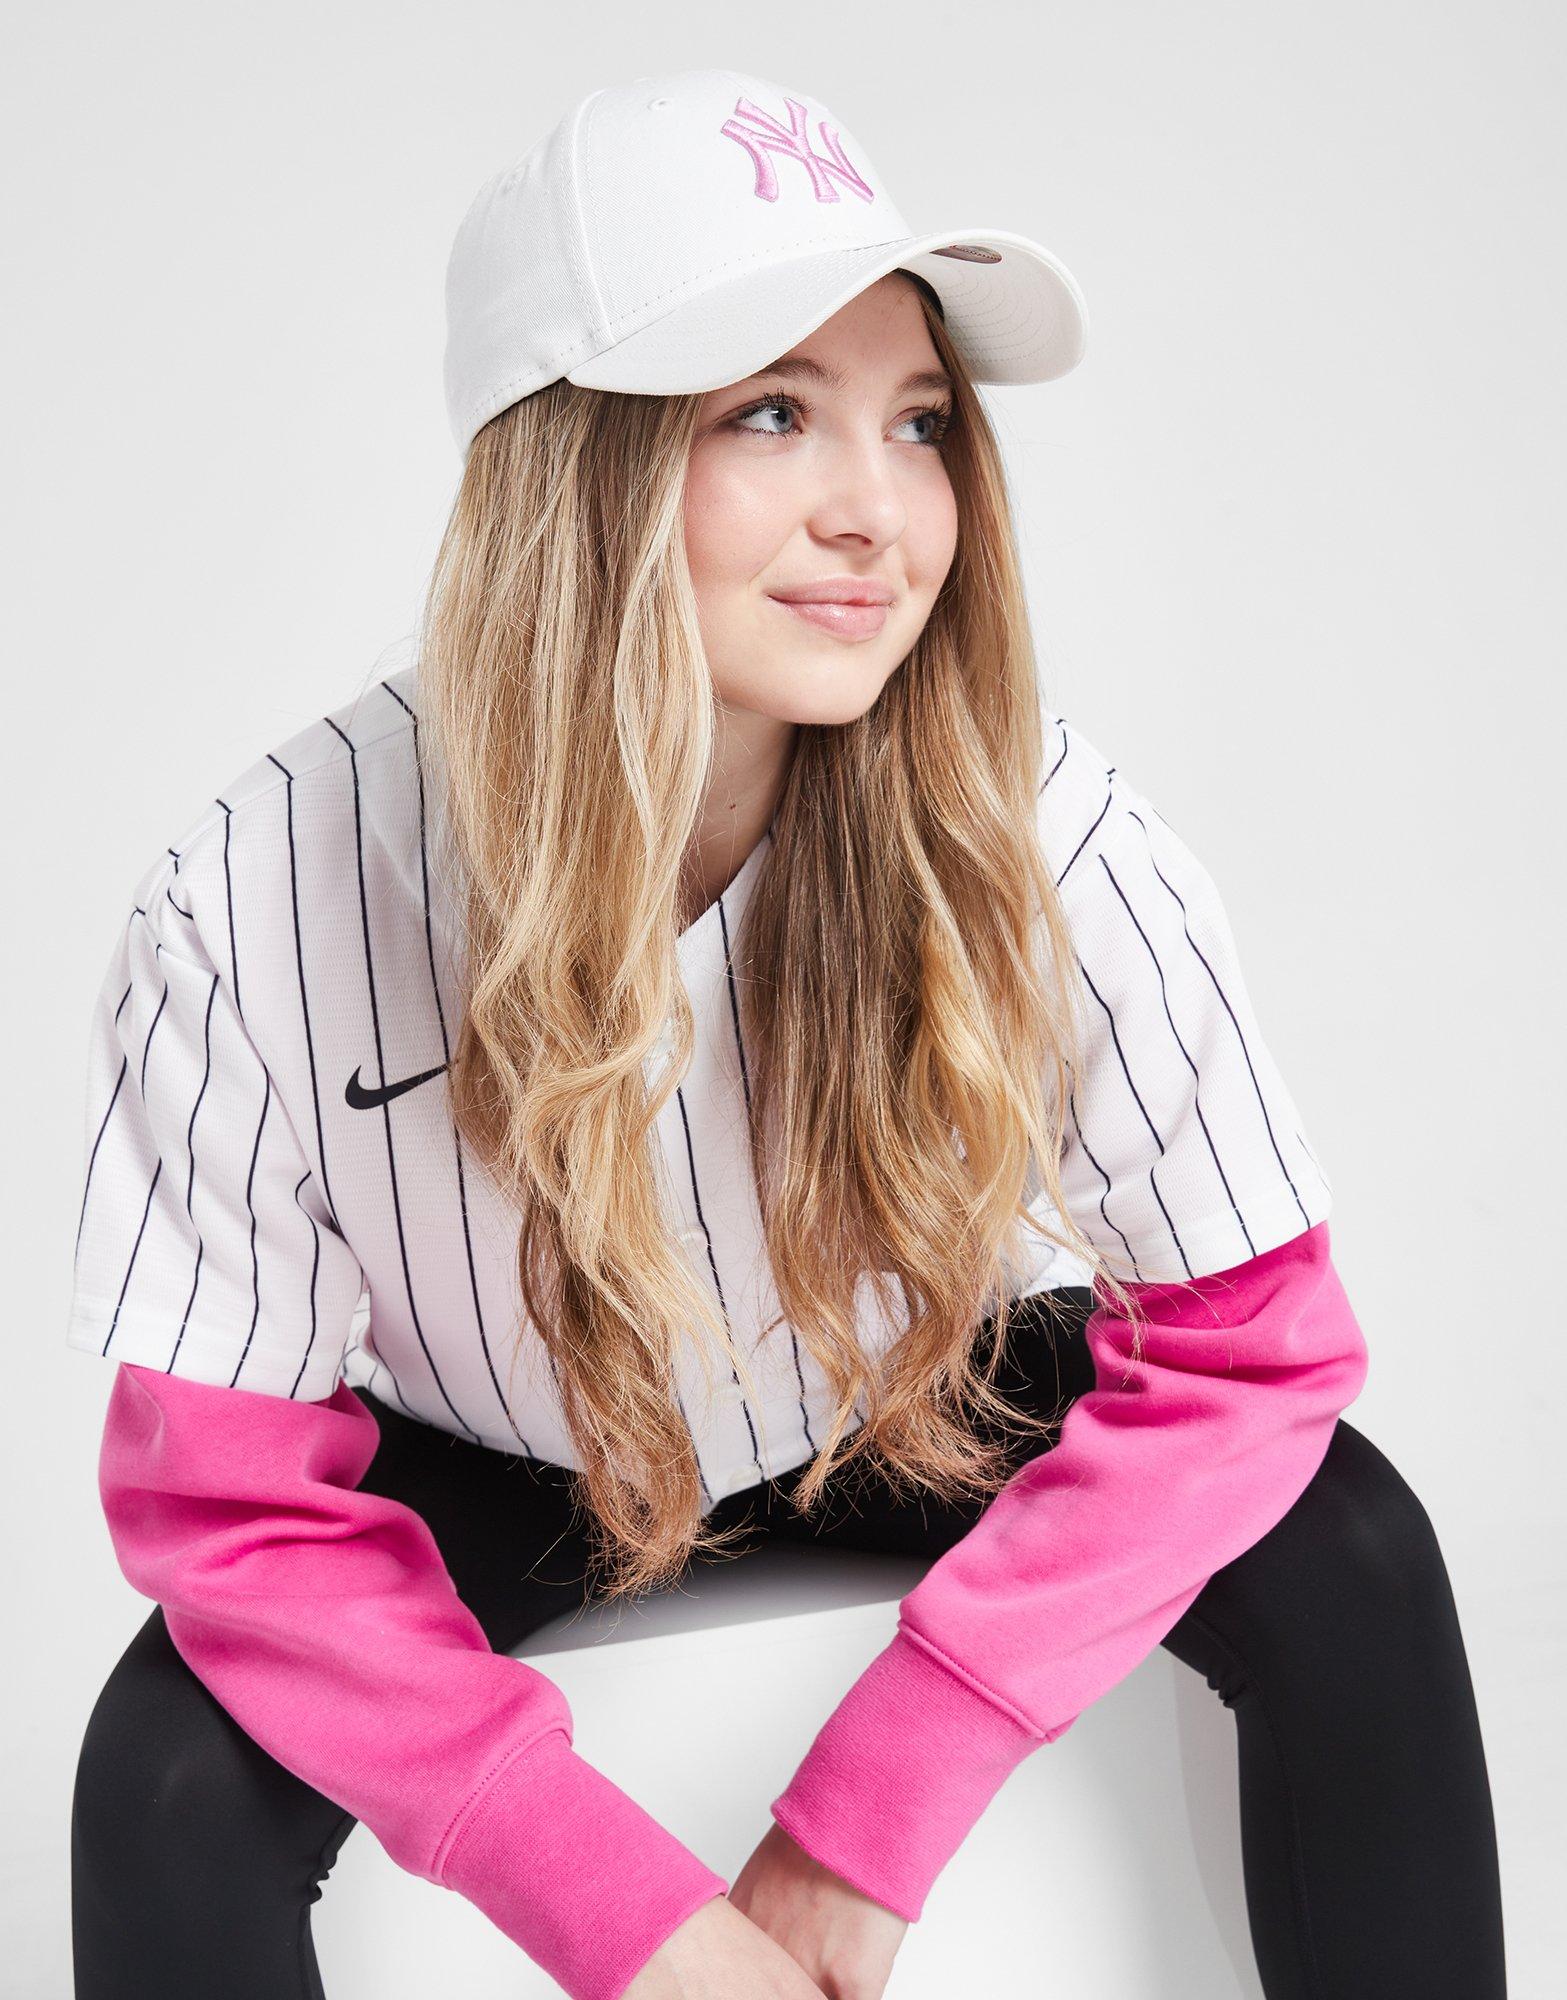 New Era, Shirts & Tops, Pink Yankees Shirt Sz 78